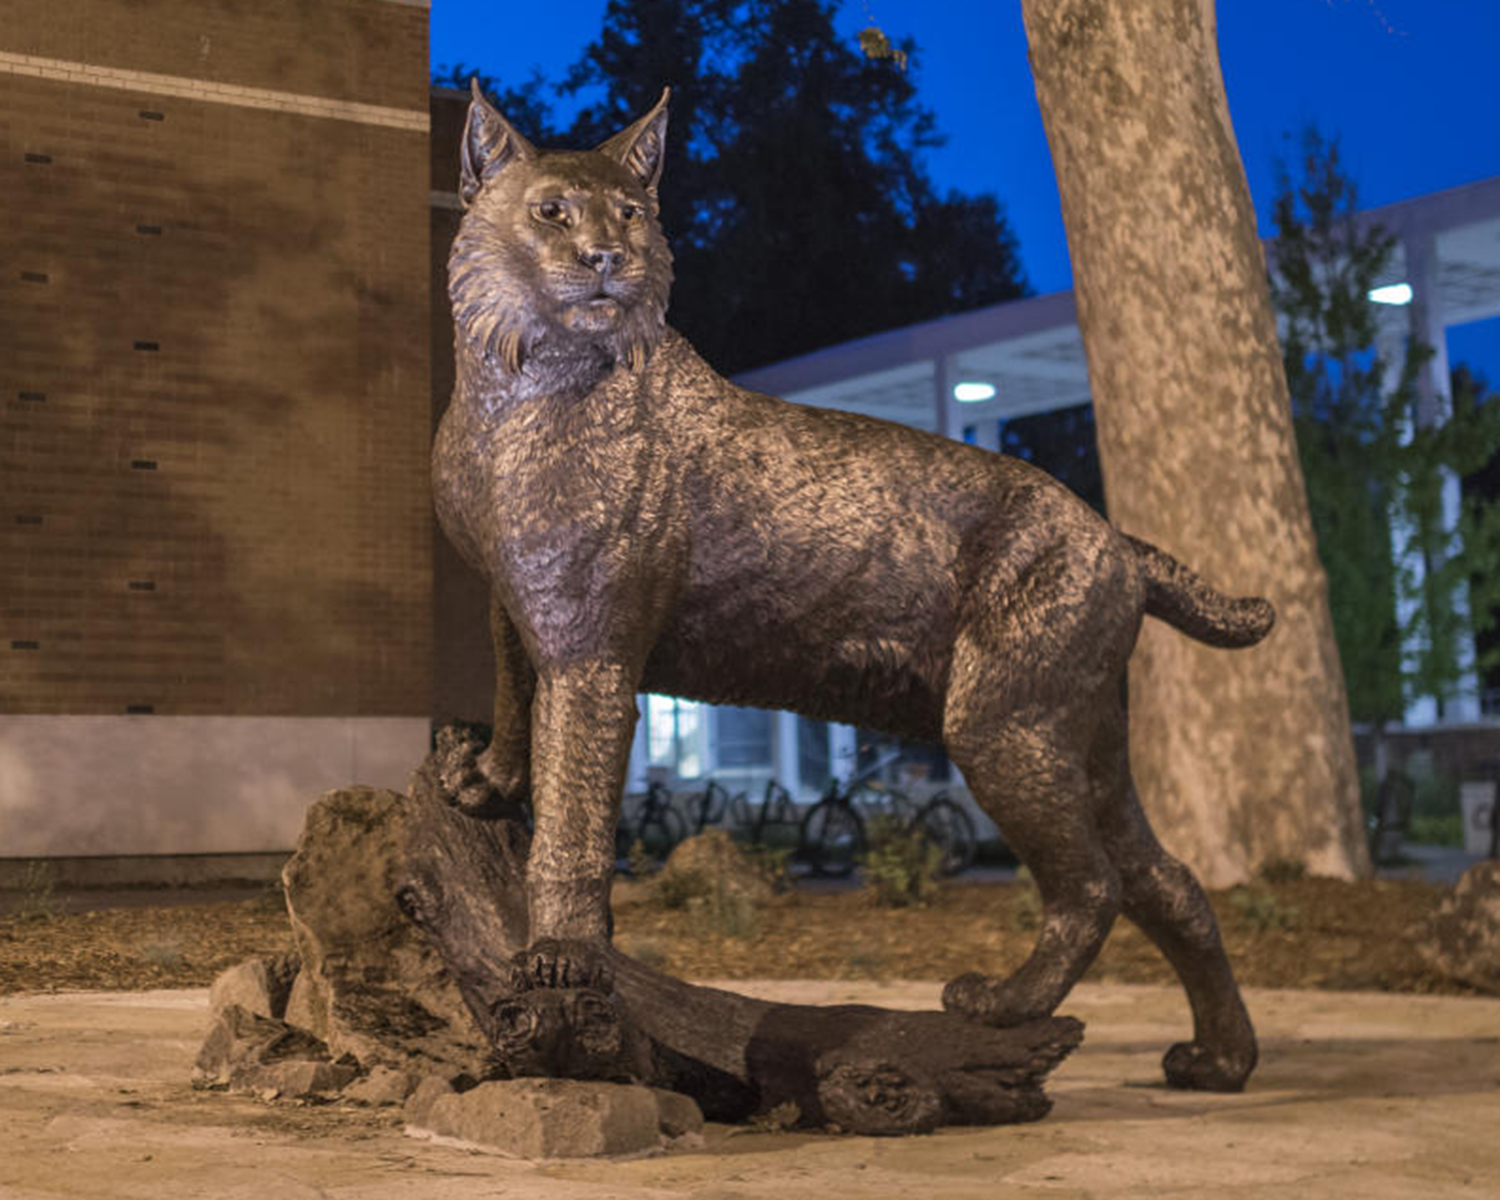 Wildcat statue at night